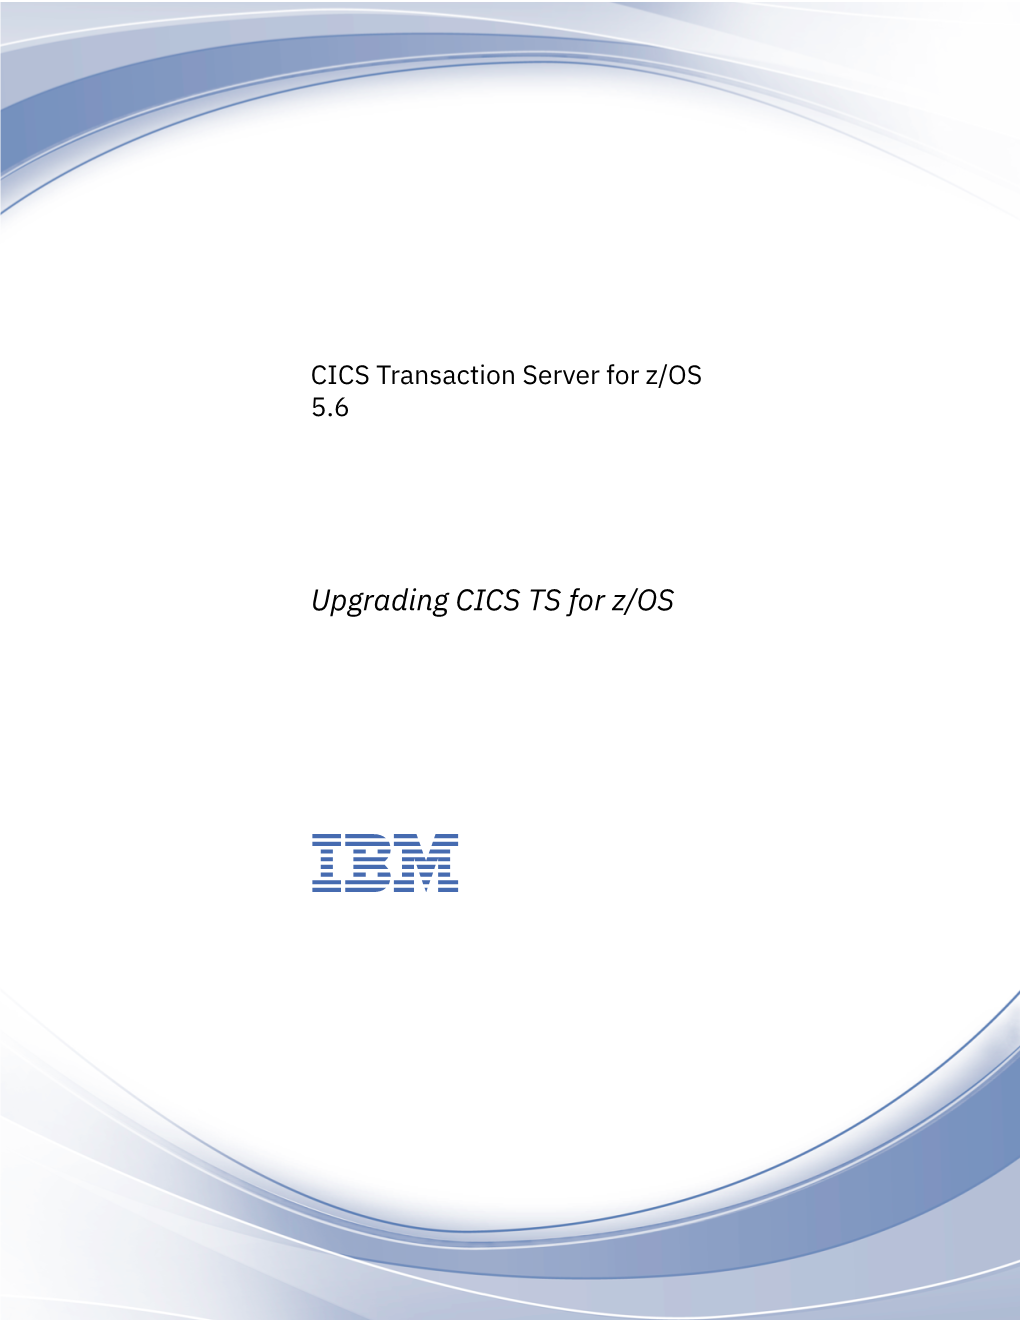 Upgrading CICS TS for Z/OS